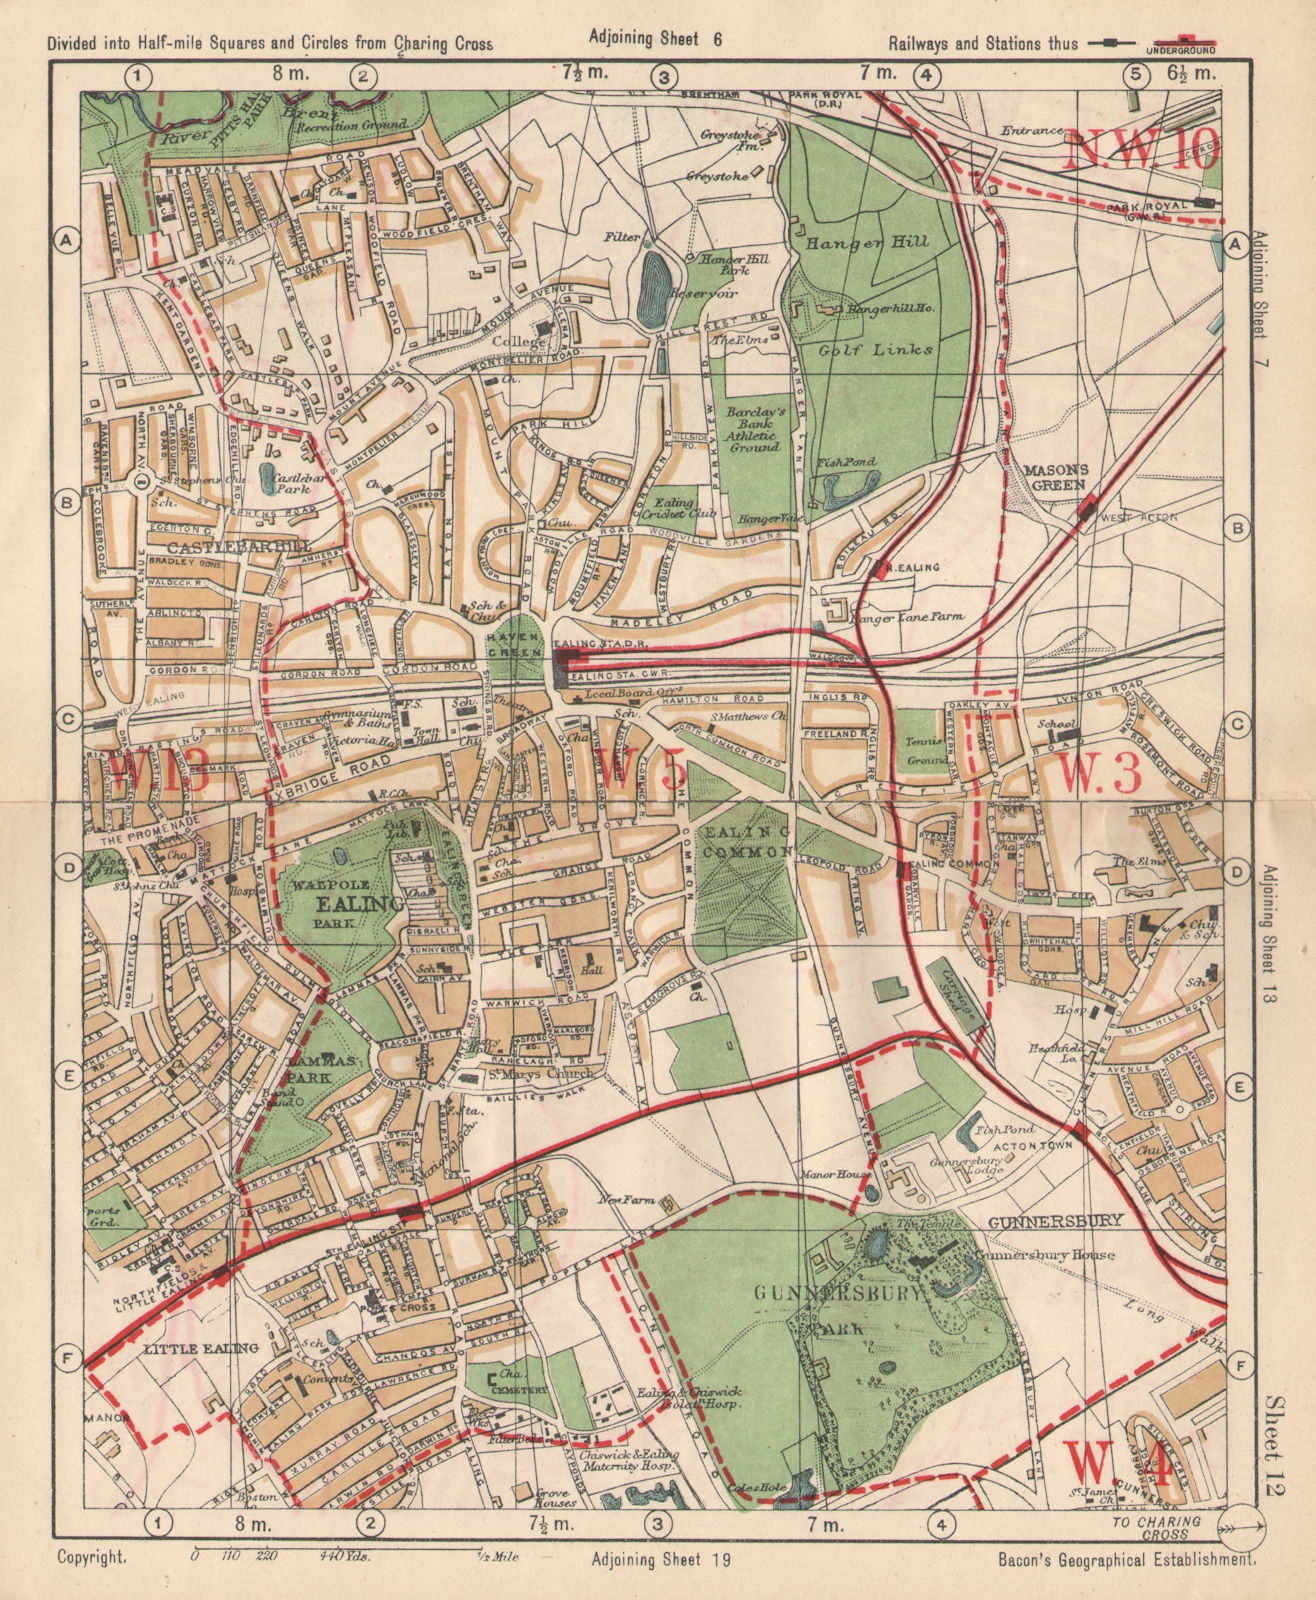 W LONDON. Ealing Park Royal West Acton Town Gunnersbury Park. BACON 1925 map